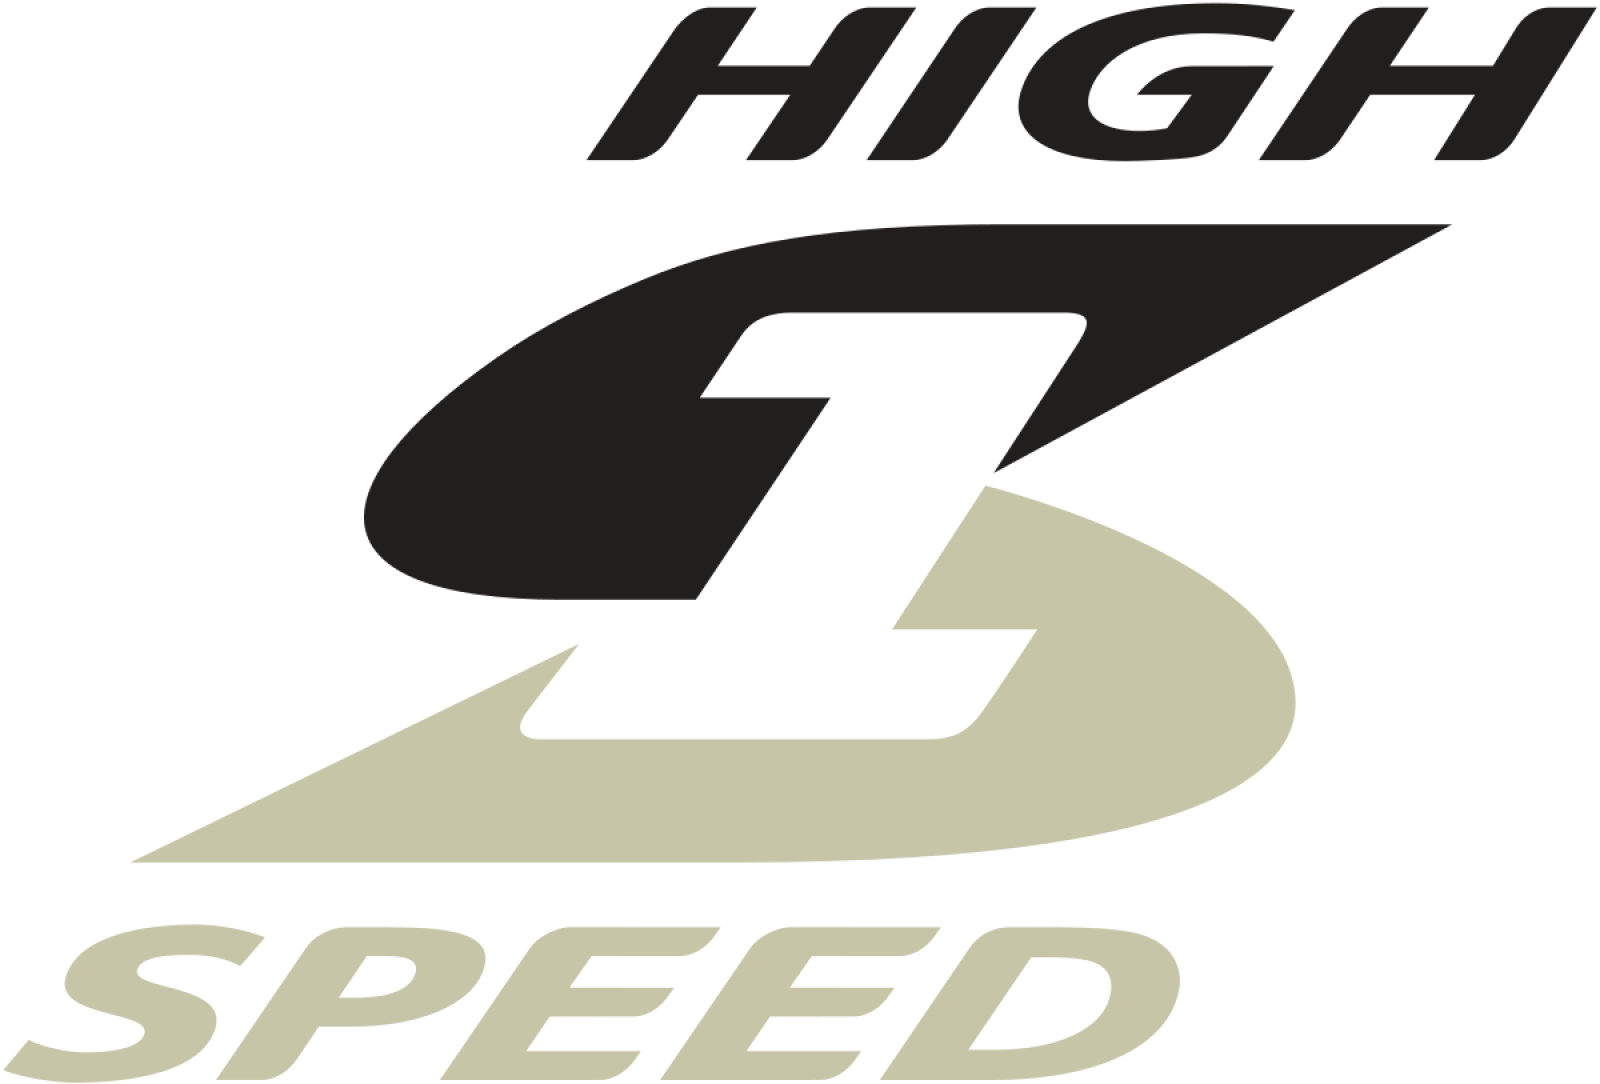 High Speed 1